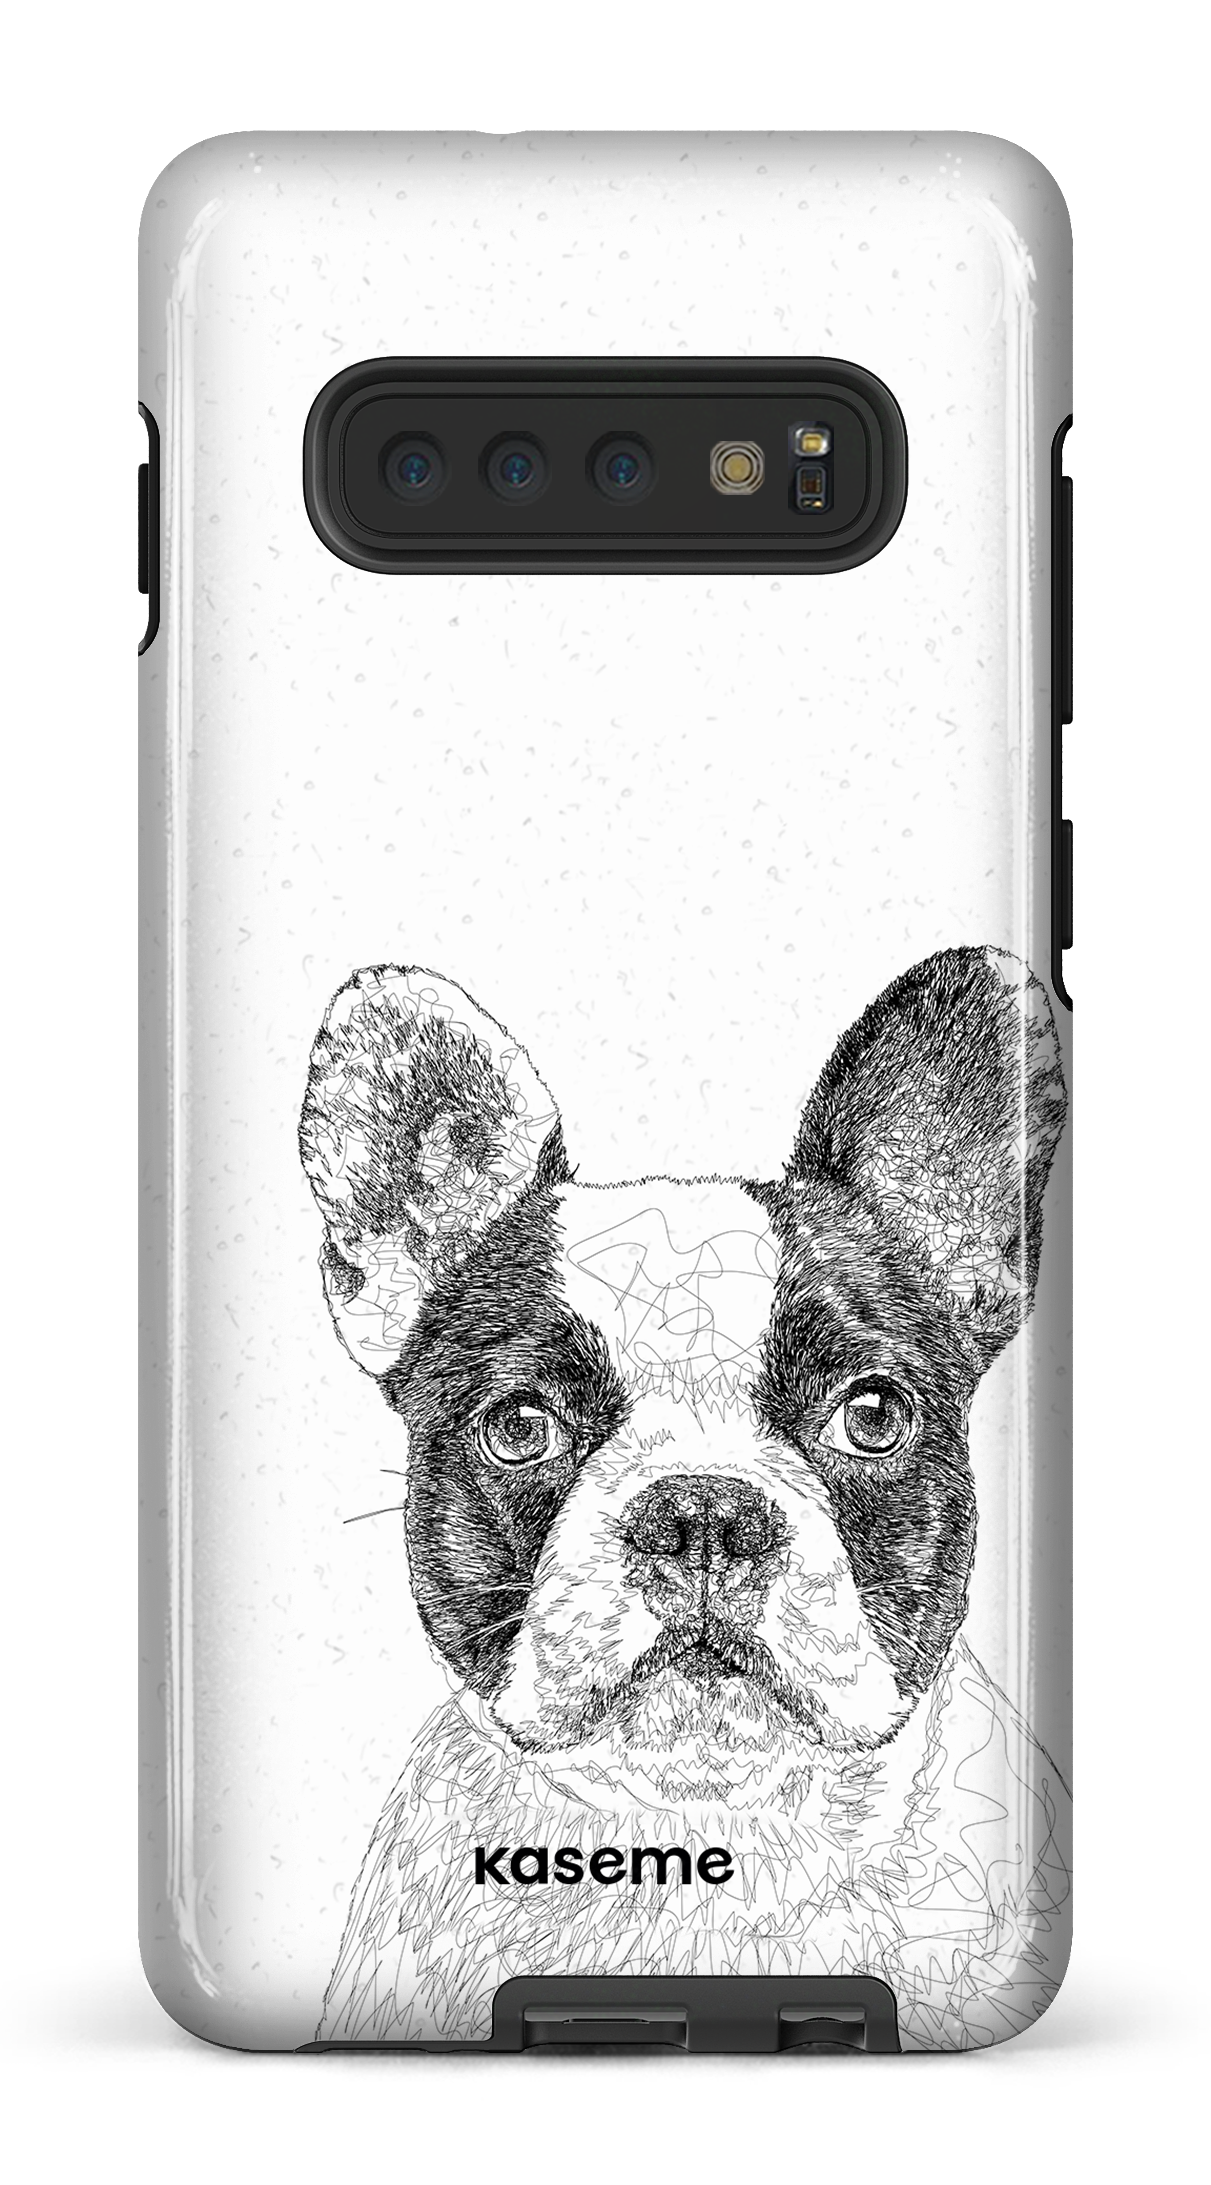 French Bulldog - Galaxy S10 Plus